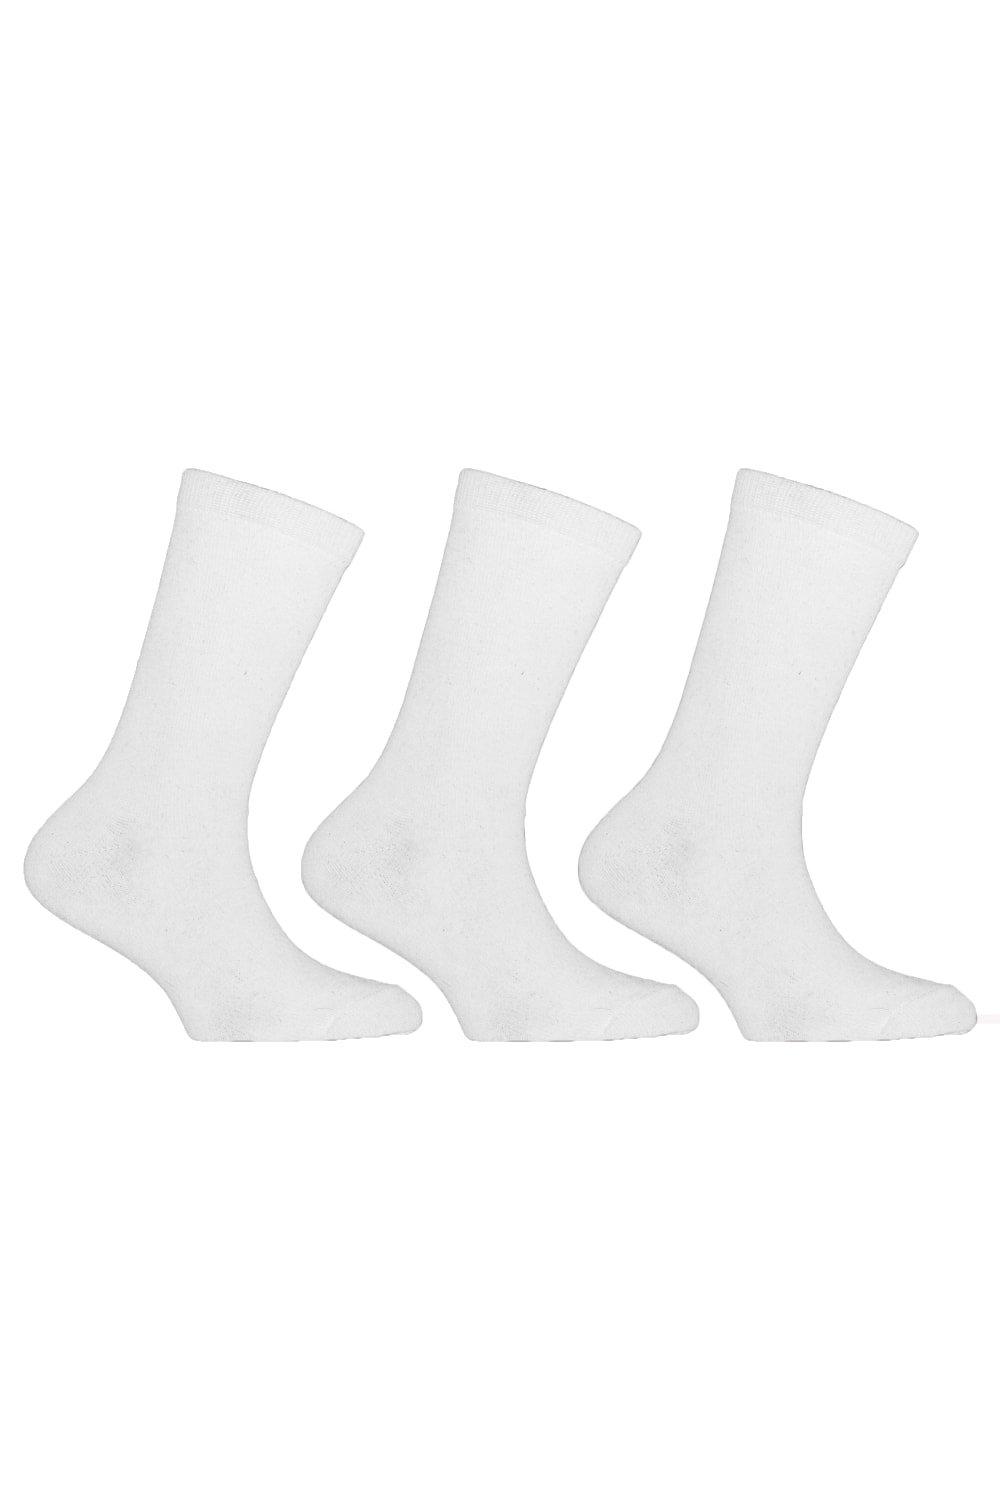 Plain Cotton Rich School Socks (Pack Of 3)